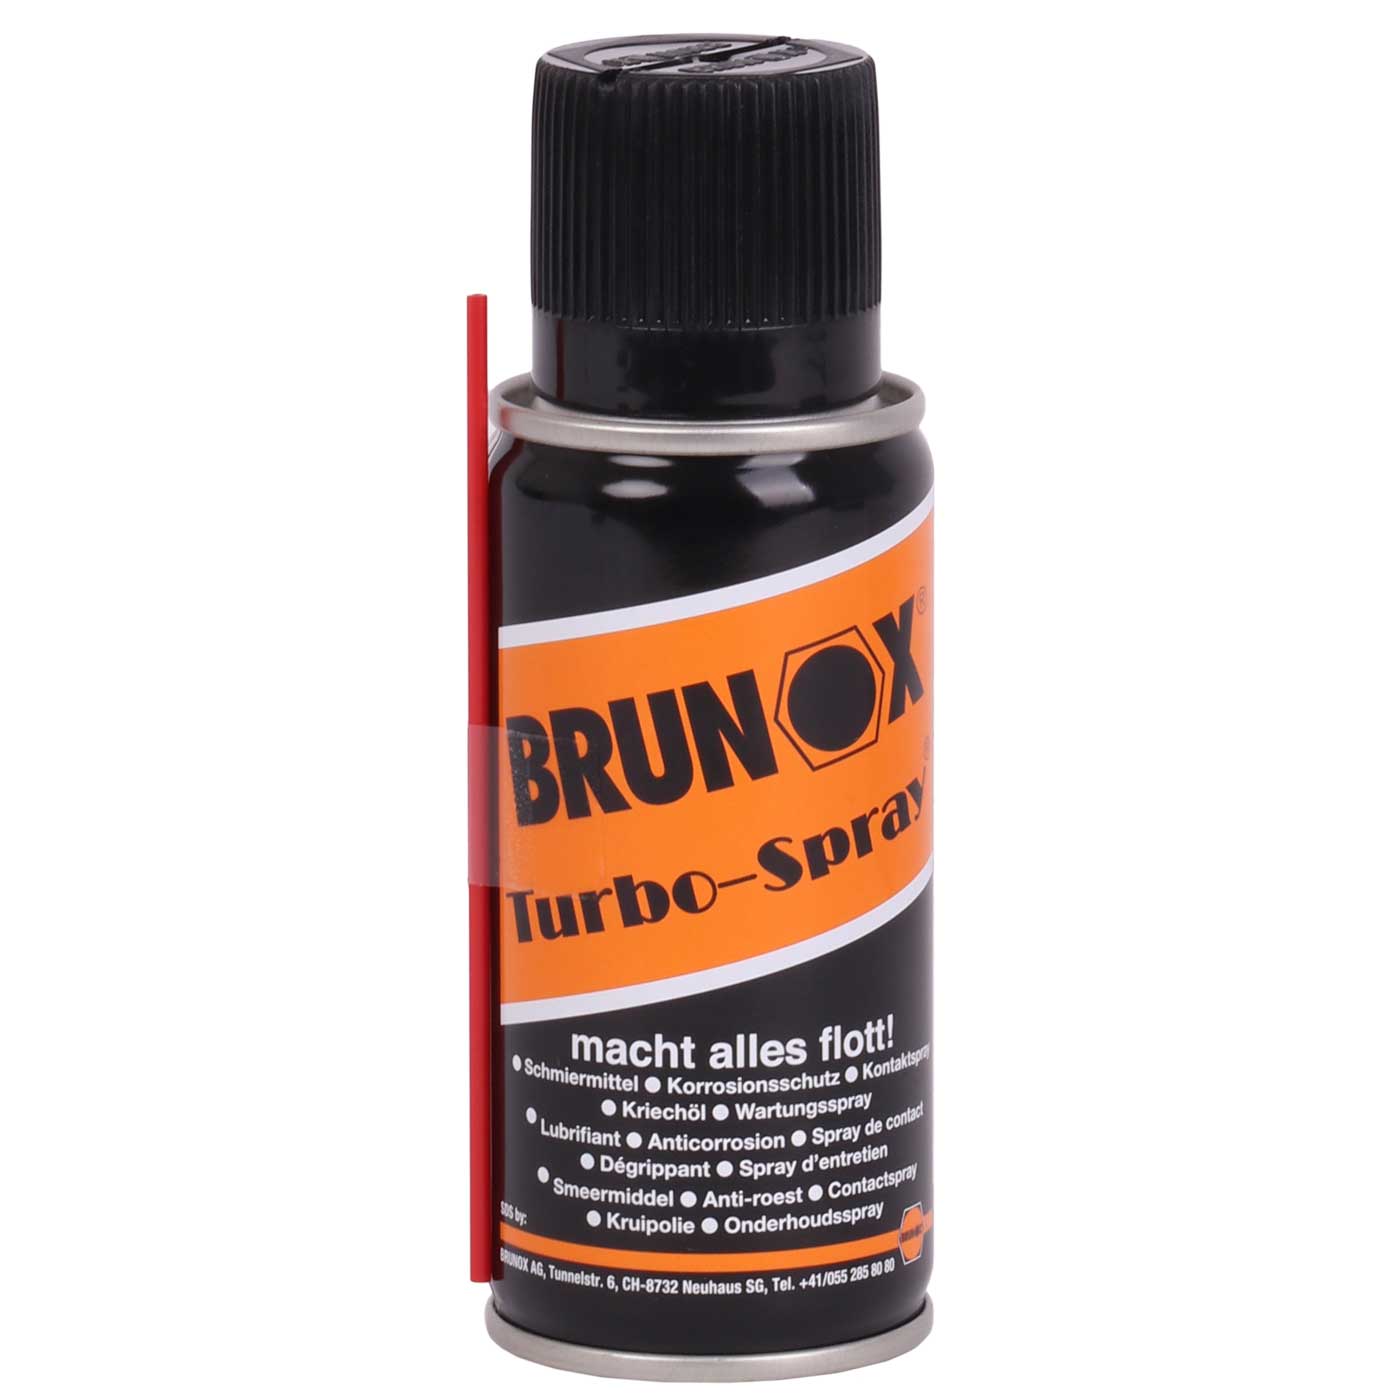 Image of Brunox Turbo-Spray 100ml